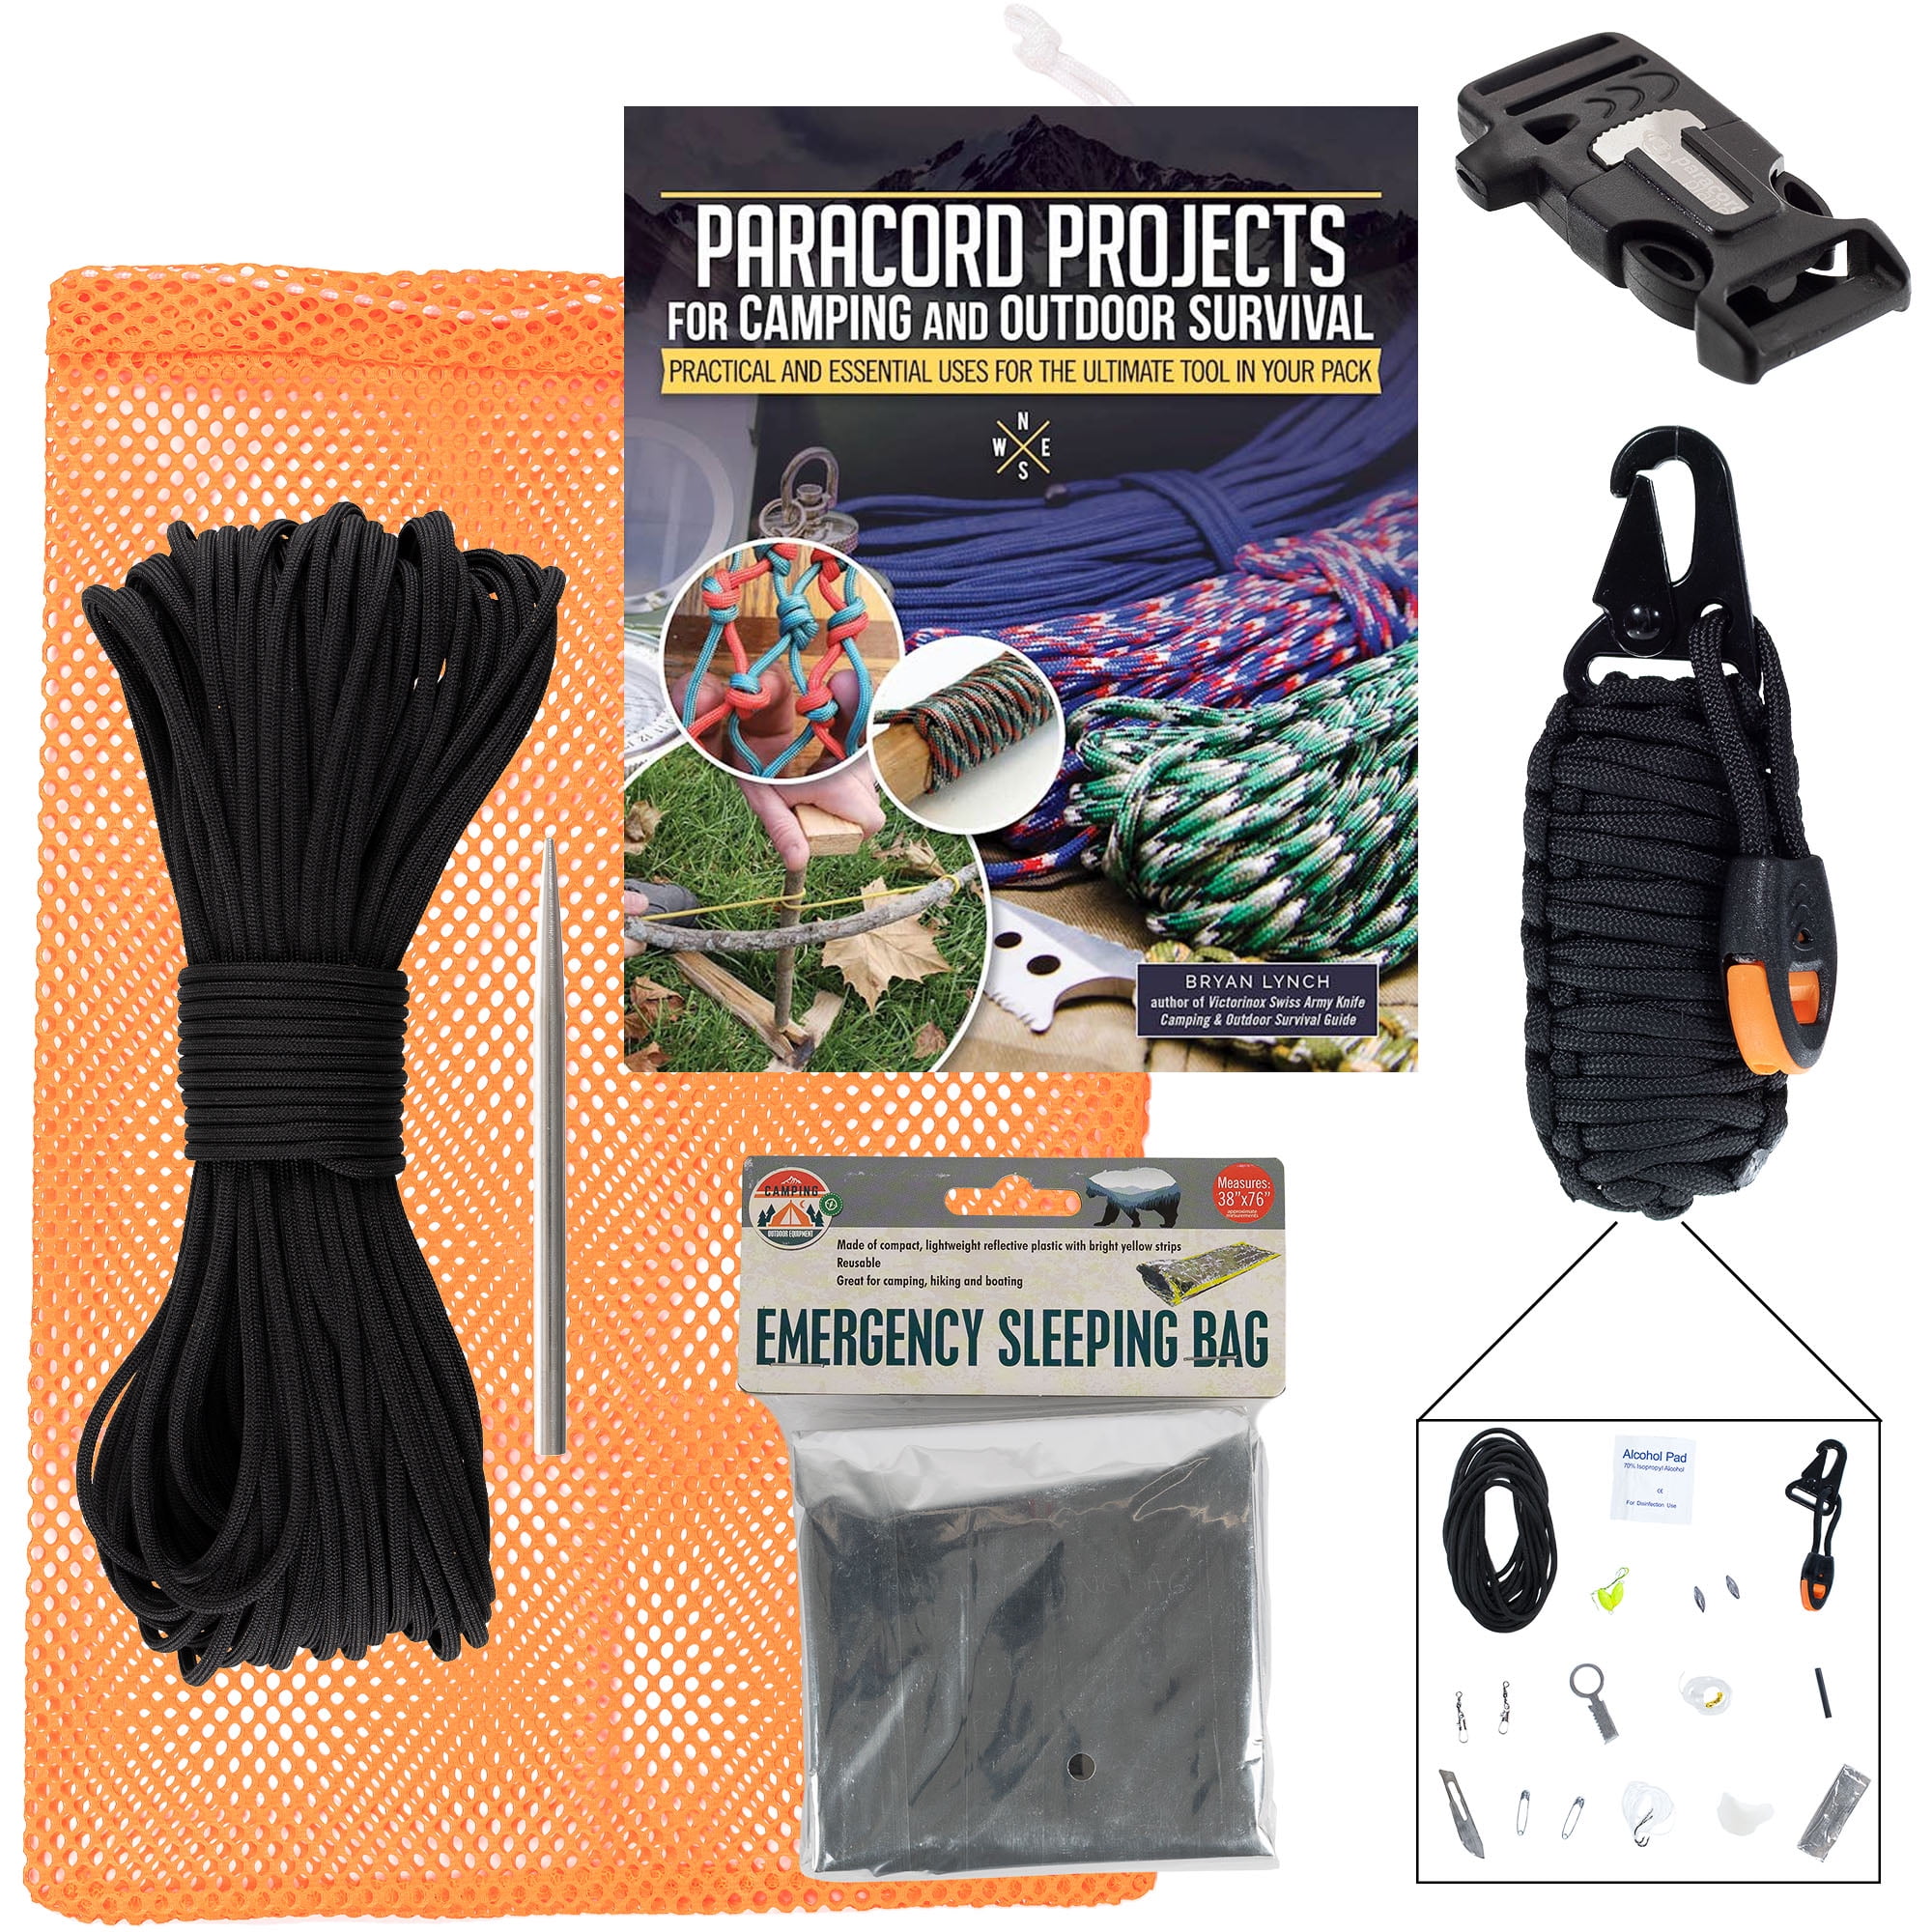 Lifeline Ultralight Survival Kit 29 Piece Ultralight Hiking Camping Safety 4052